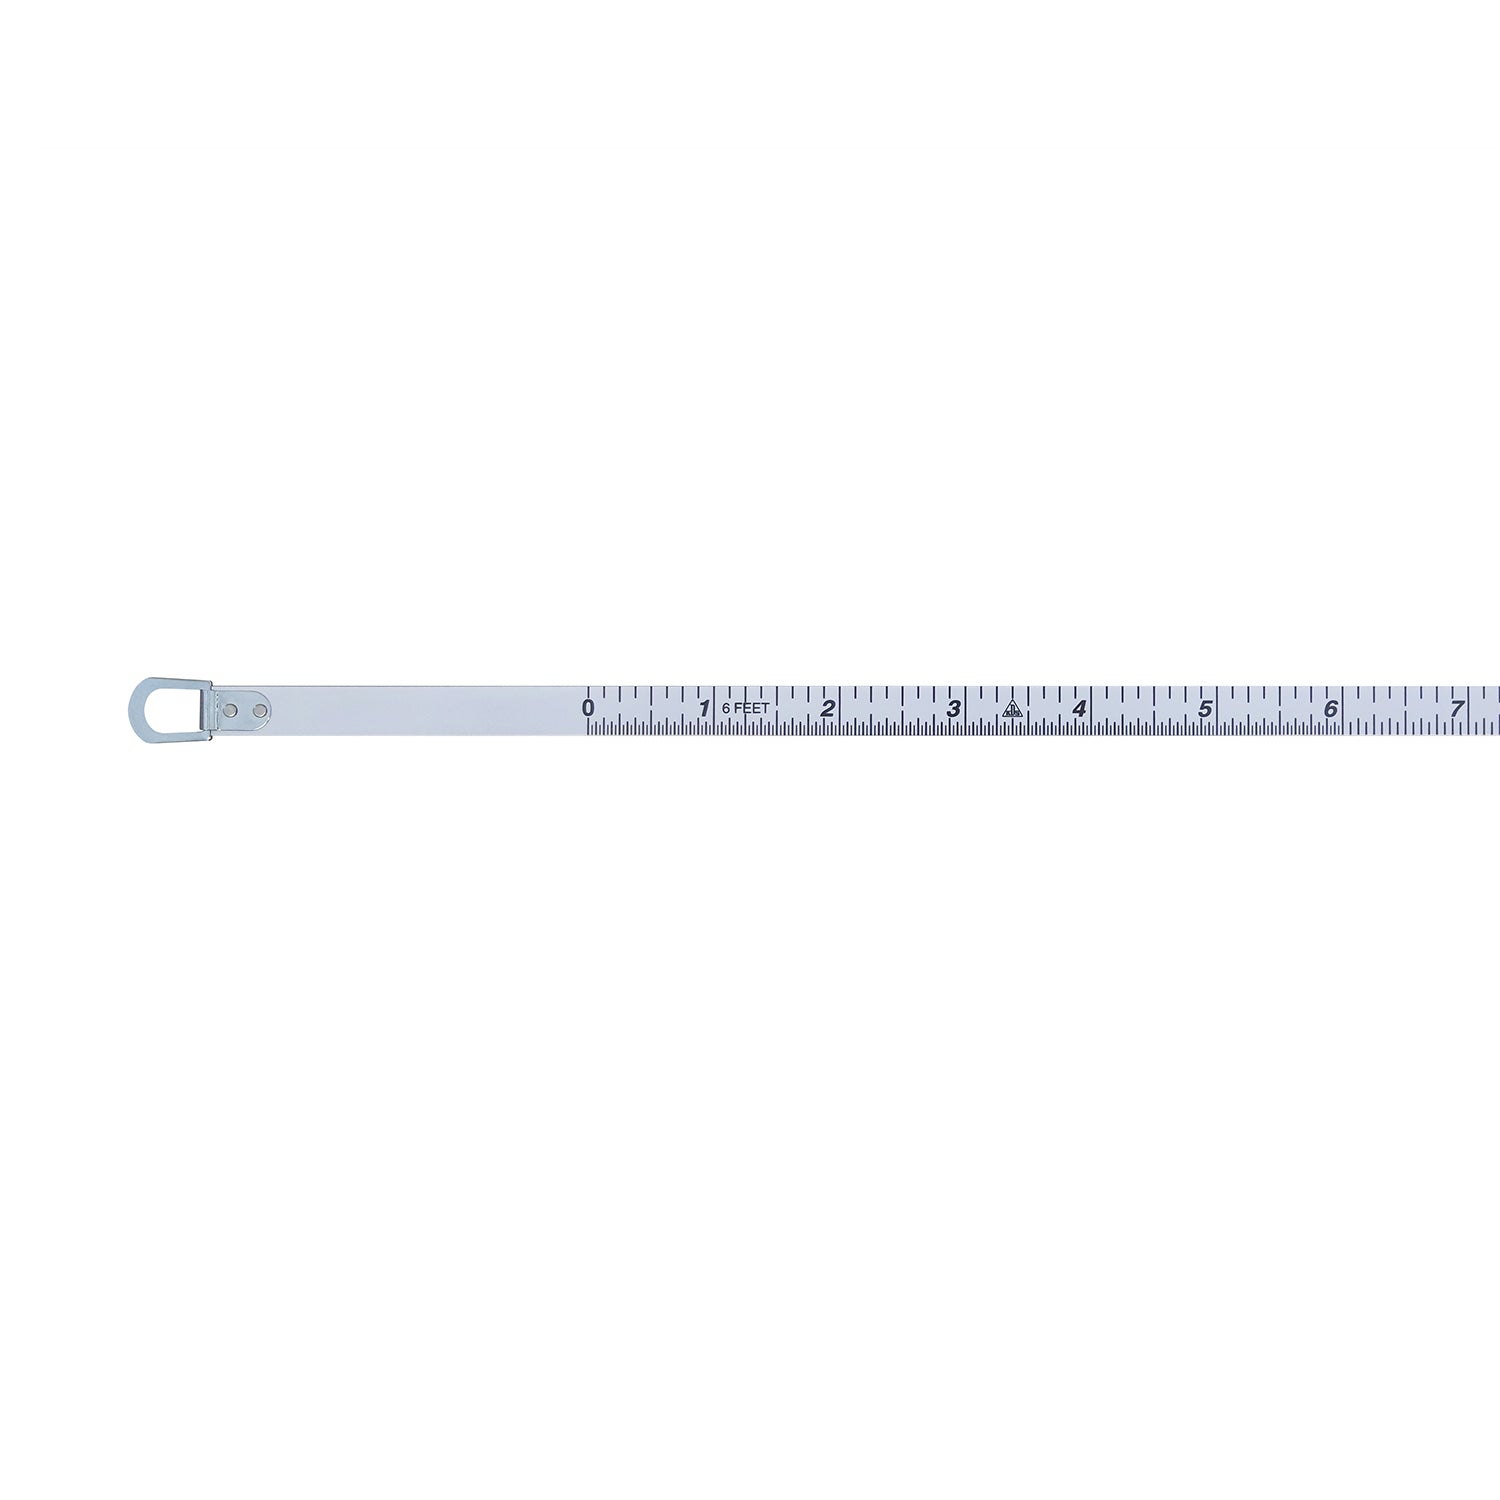 Keson 6' Diameter Tape (Inches, Ft) -Measurement Tools- eGPS Solutions Inc.